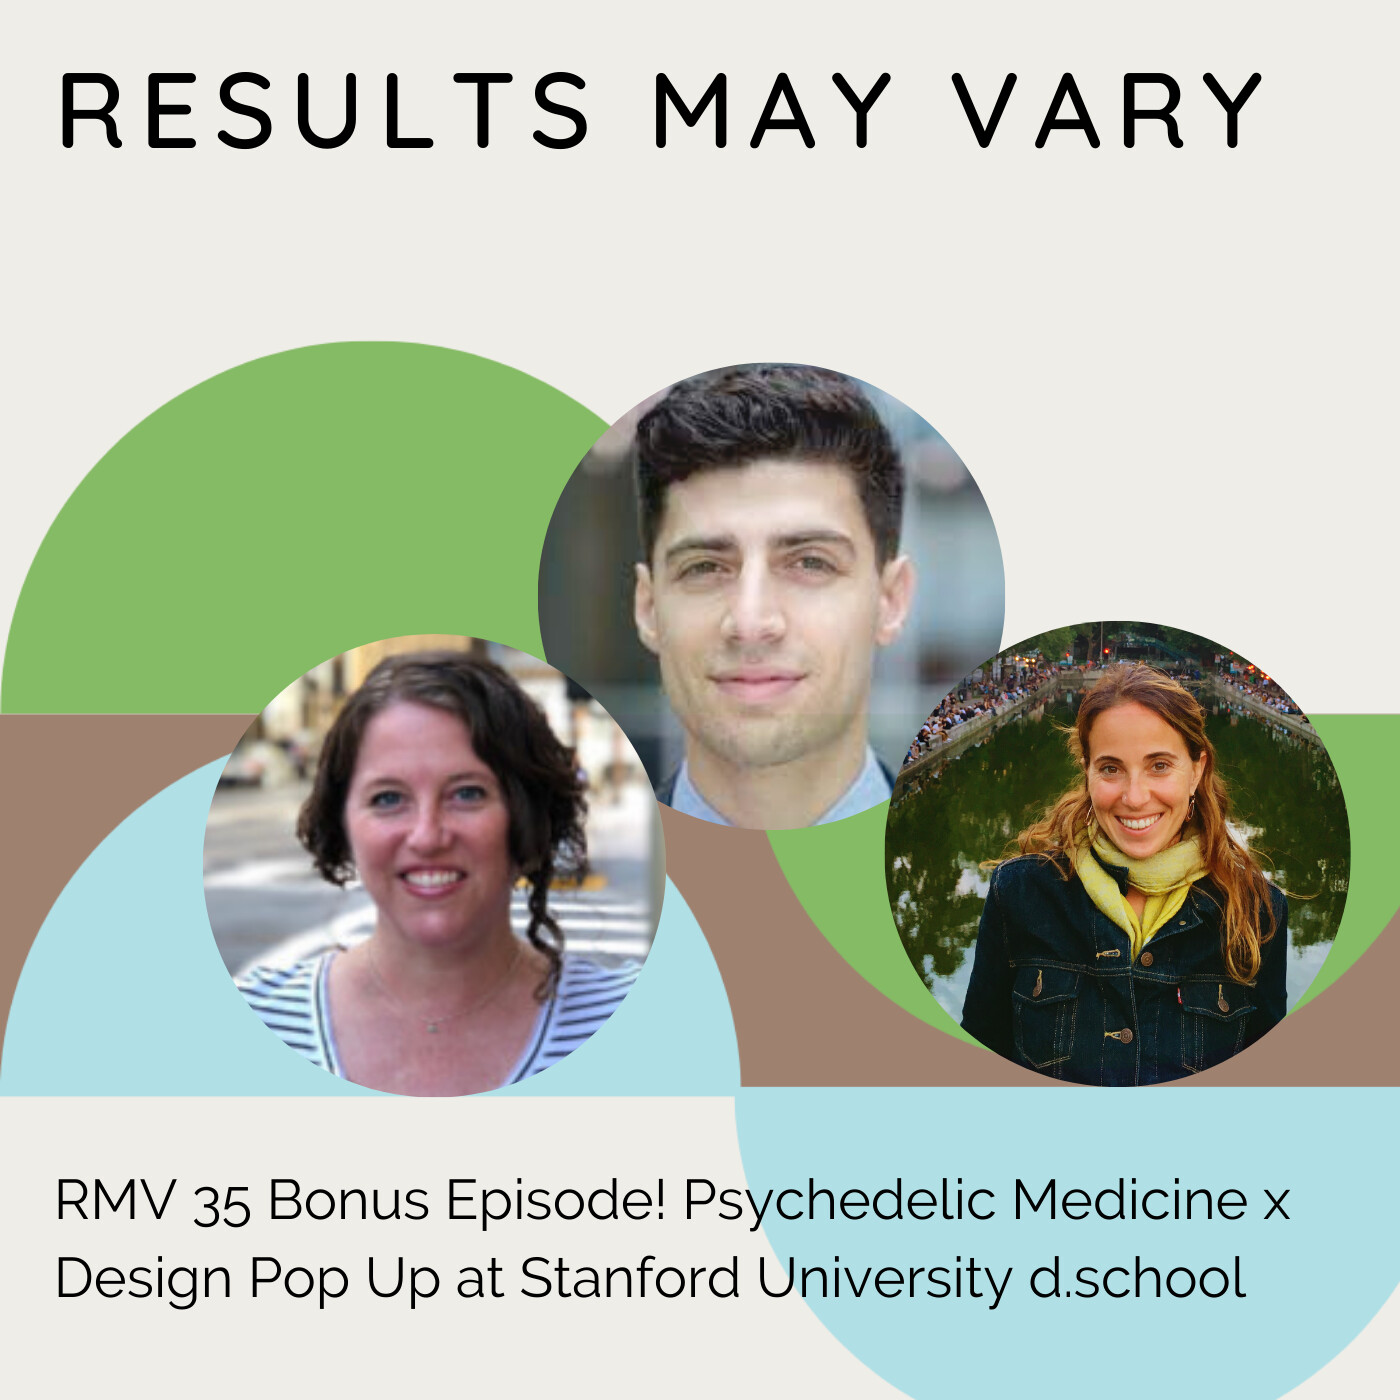 RMV 35 Bonus Episode! Psychedelic Medicine x Design Pop Up at Stanford University d.school